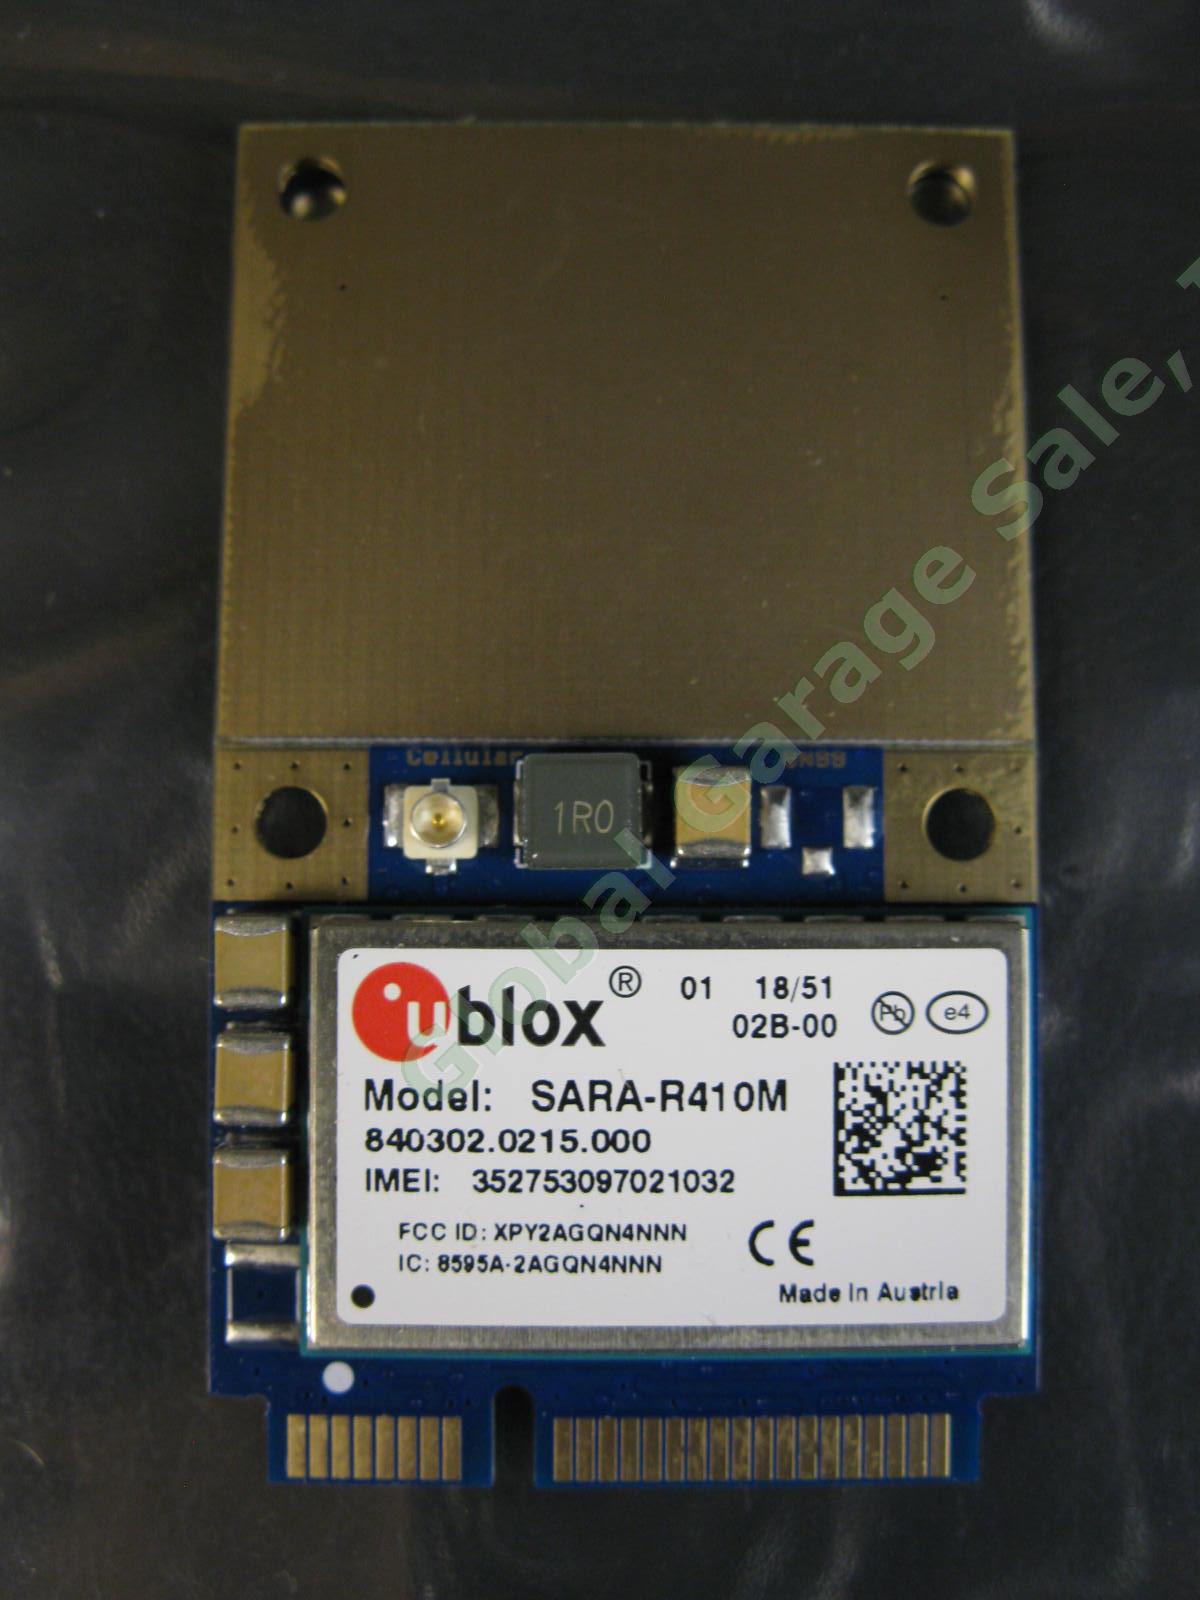 10 Reyax Cellular 4G LTE Mini PCIe Ublox SARA-R410M Micro SIM Card Transceiver 1